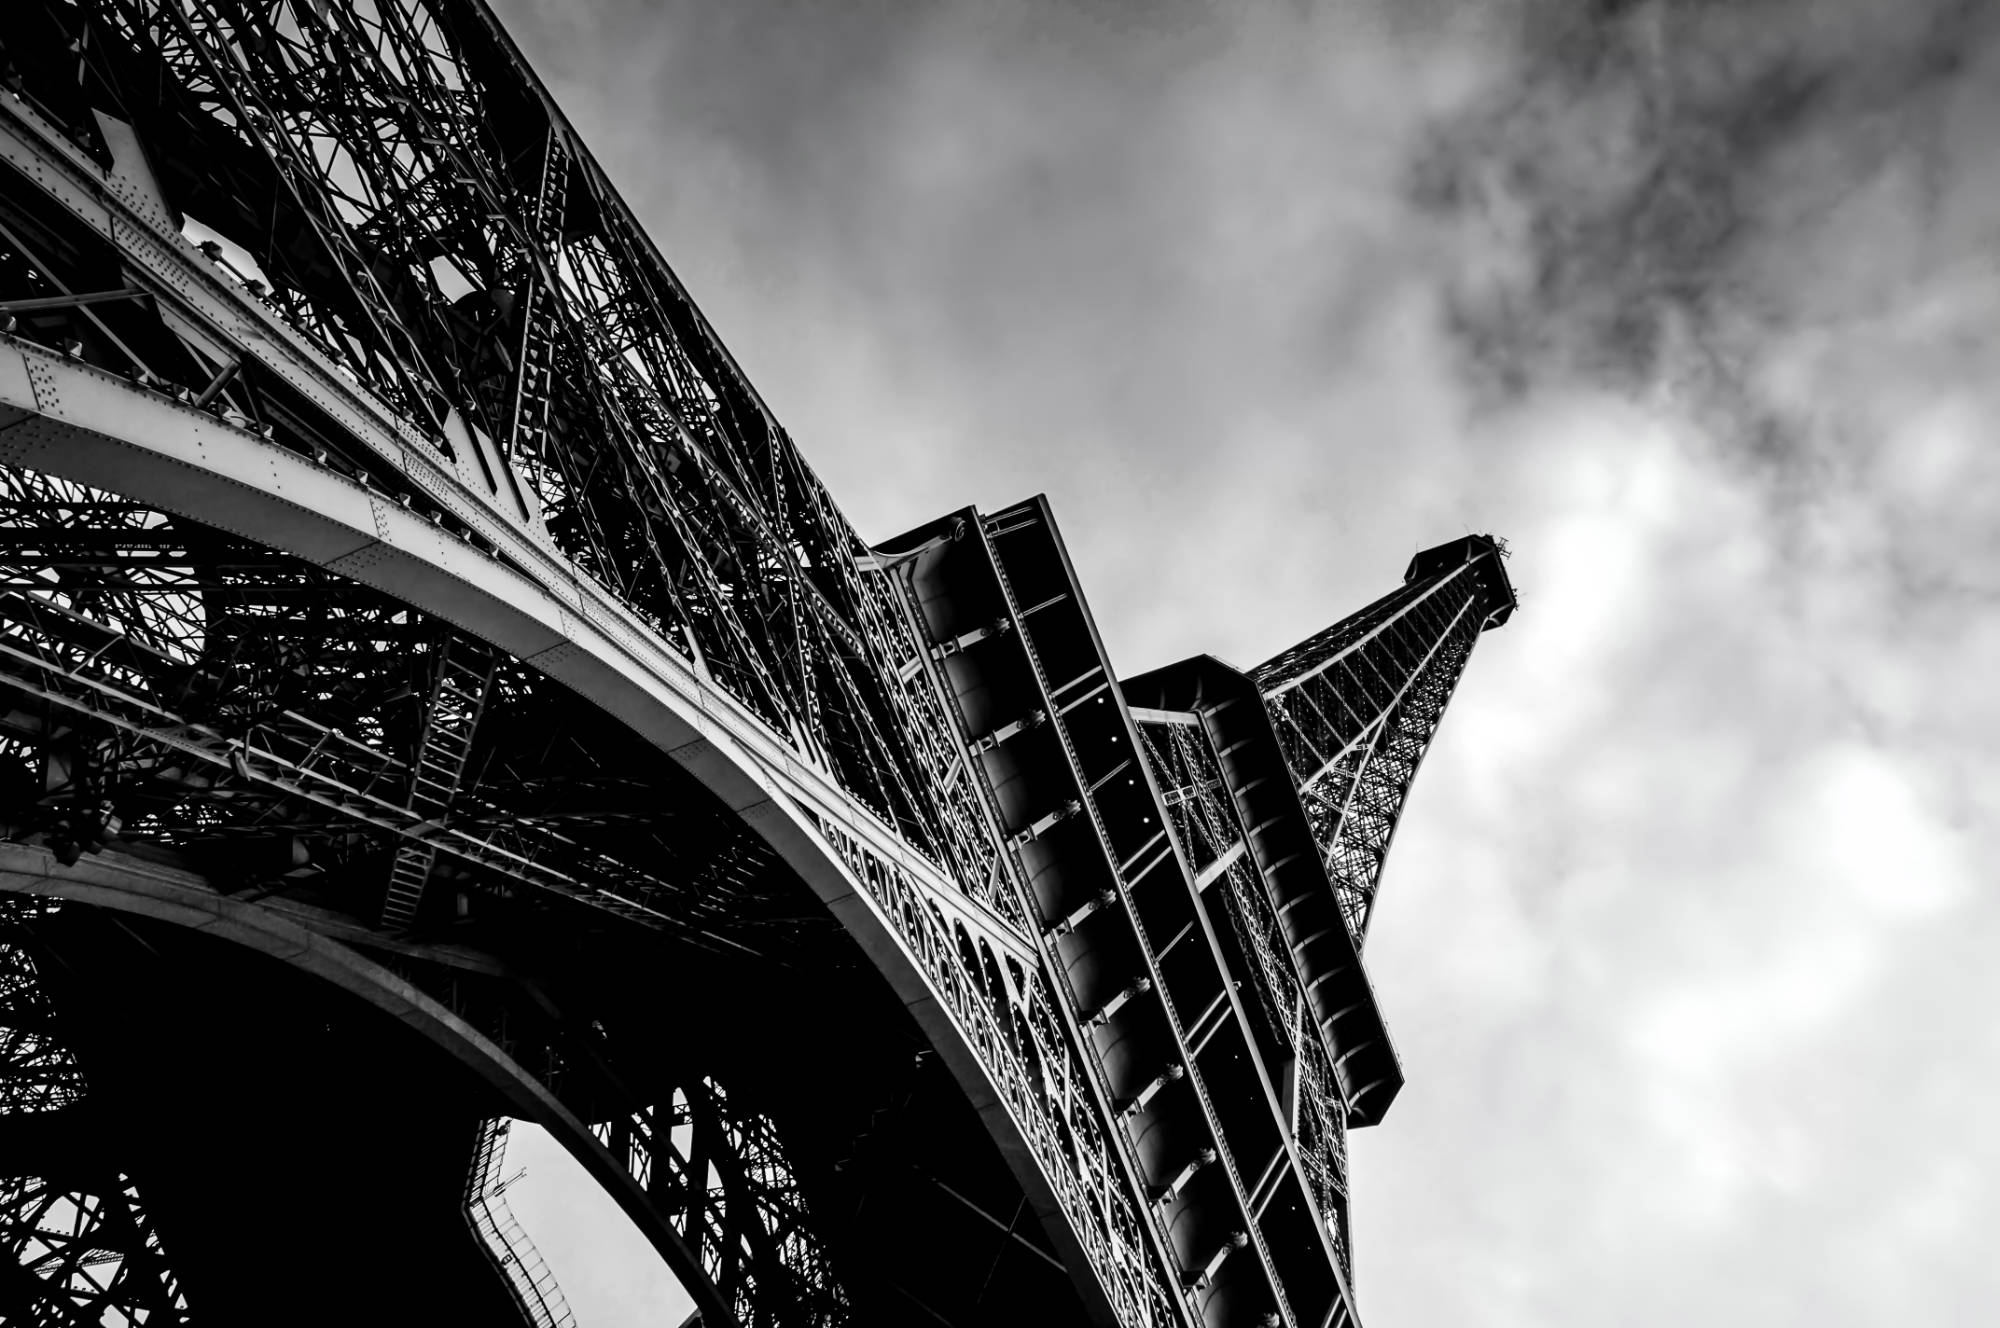 Marc's Eiffel Tower